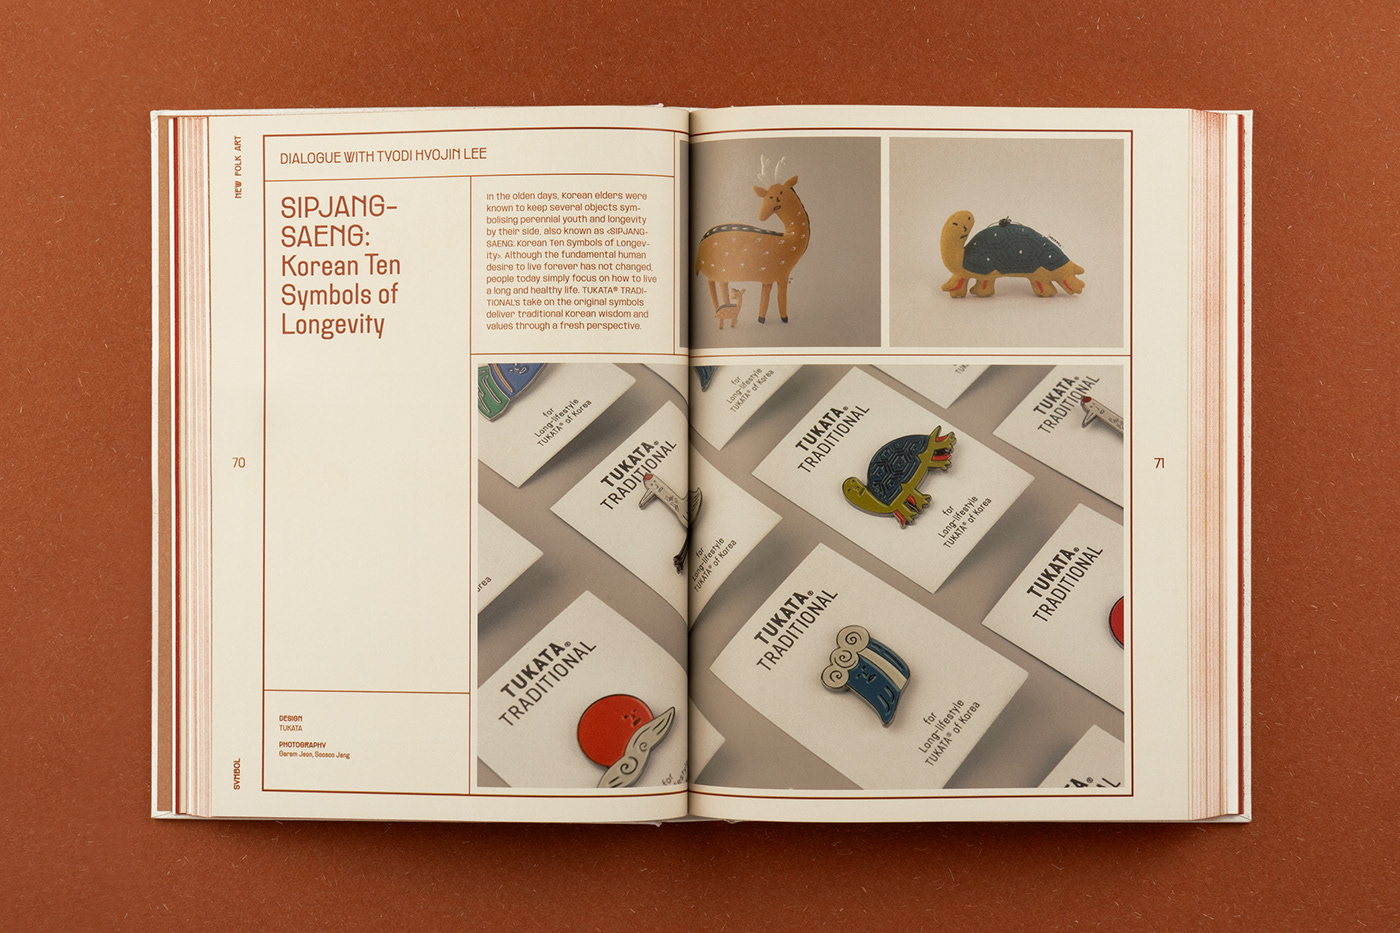 folk art culture history typography   book design editorial design  graphic design  craft Folklore traditional